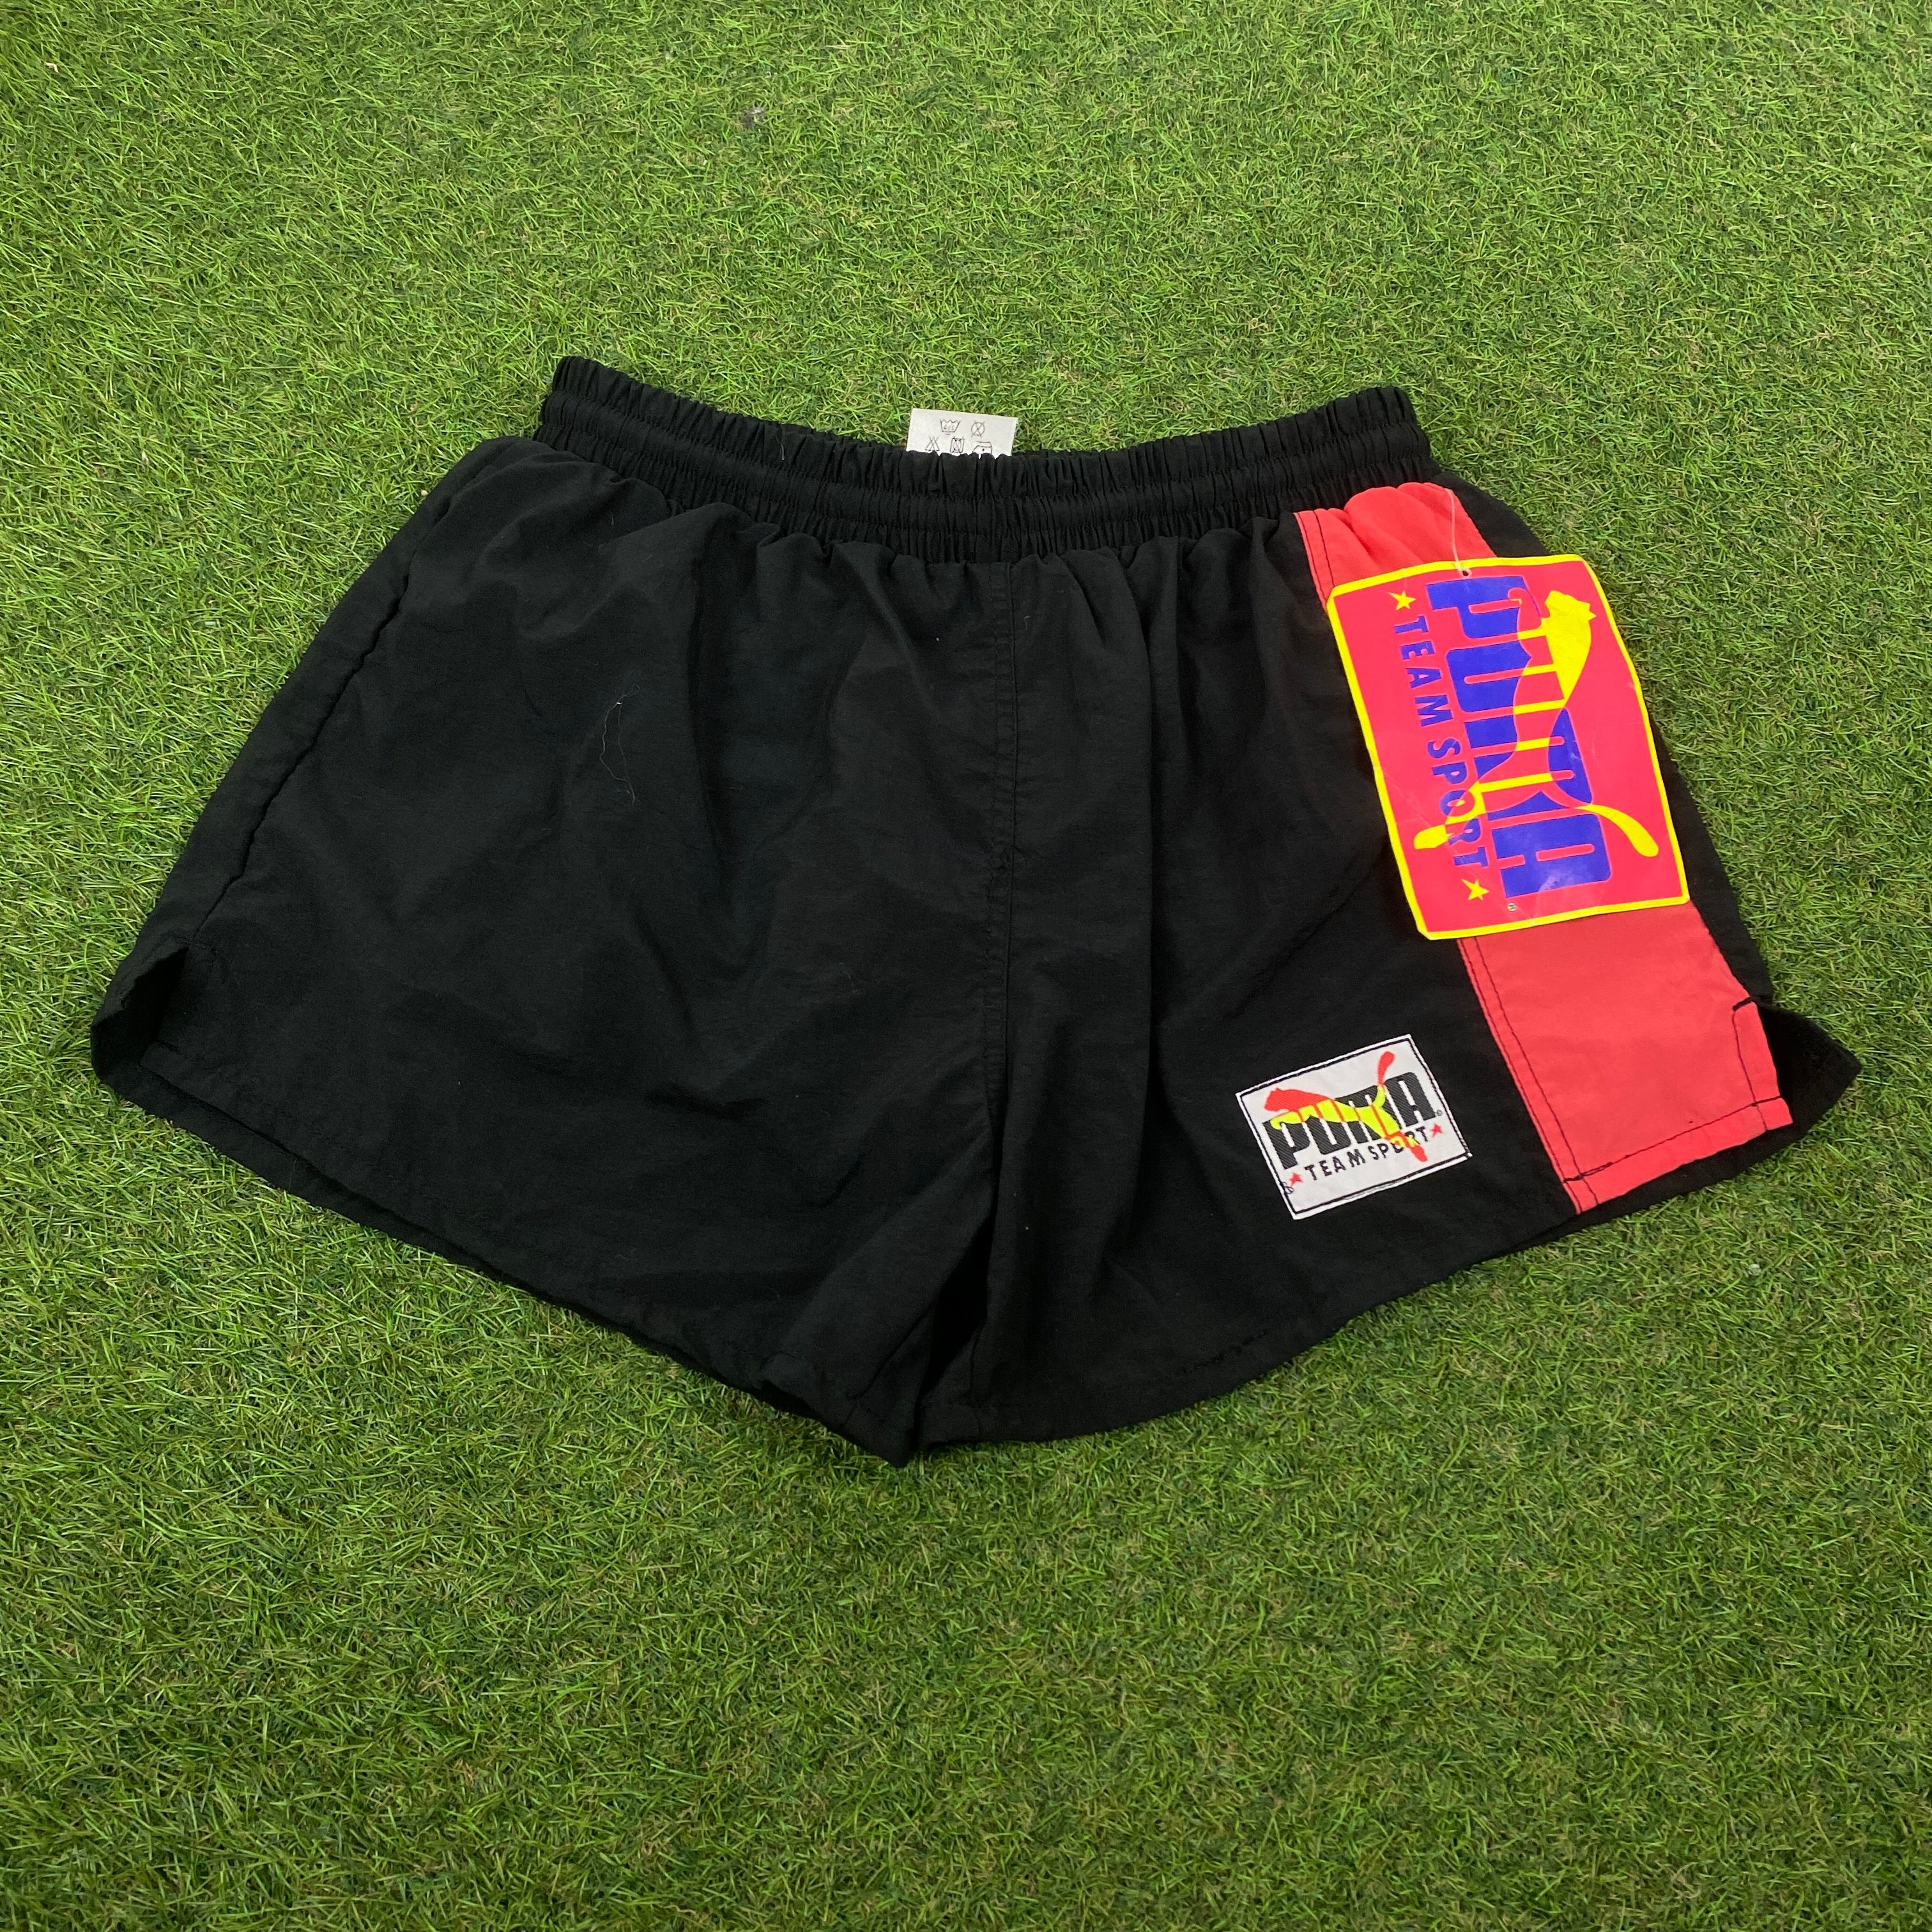 Retro Puma Nylon Sprinter Shorts Black Small